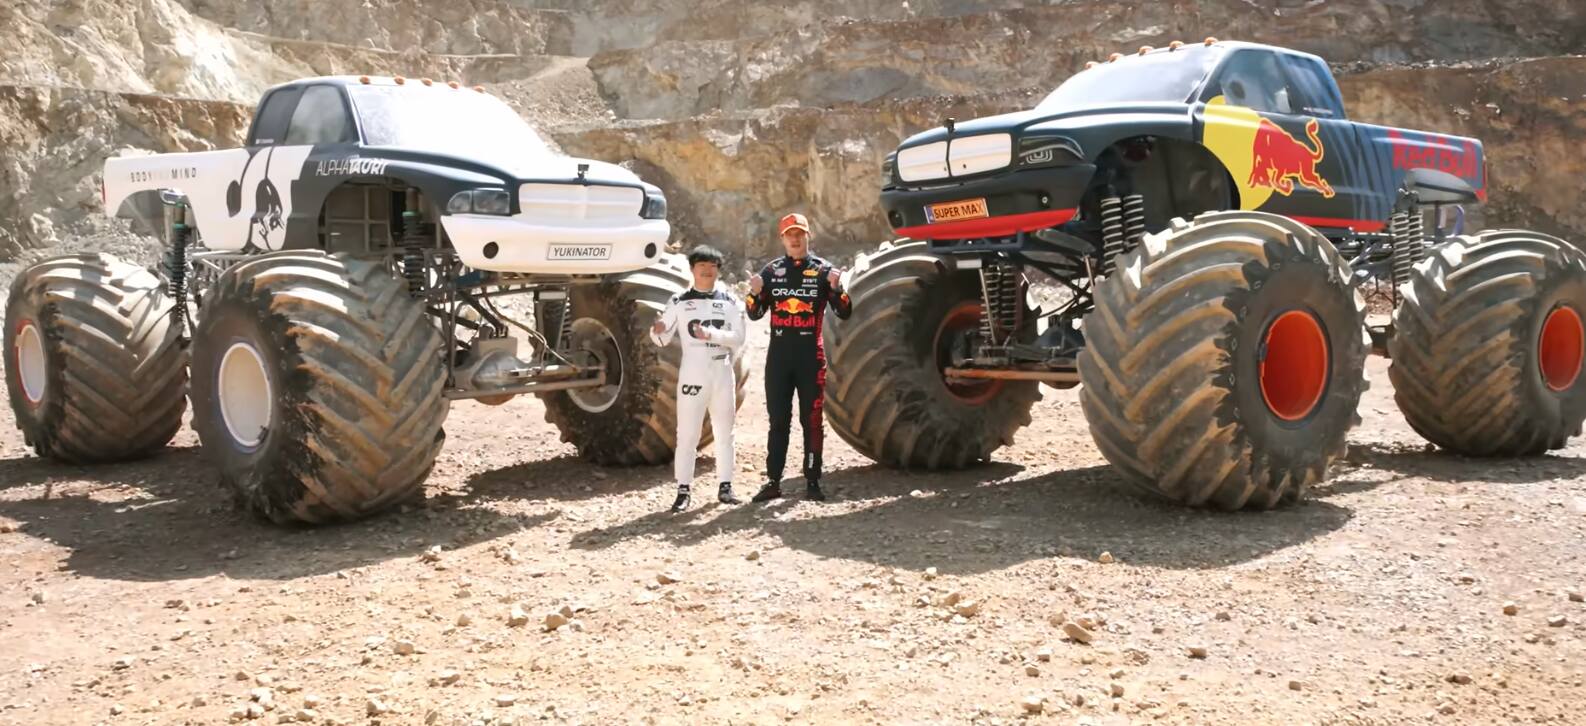 Formula 1 drivers Max Verstappen and Yuki Tsunoda stand in front of monster trucks